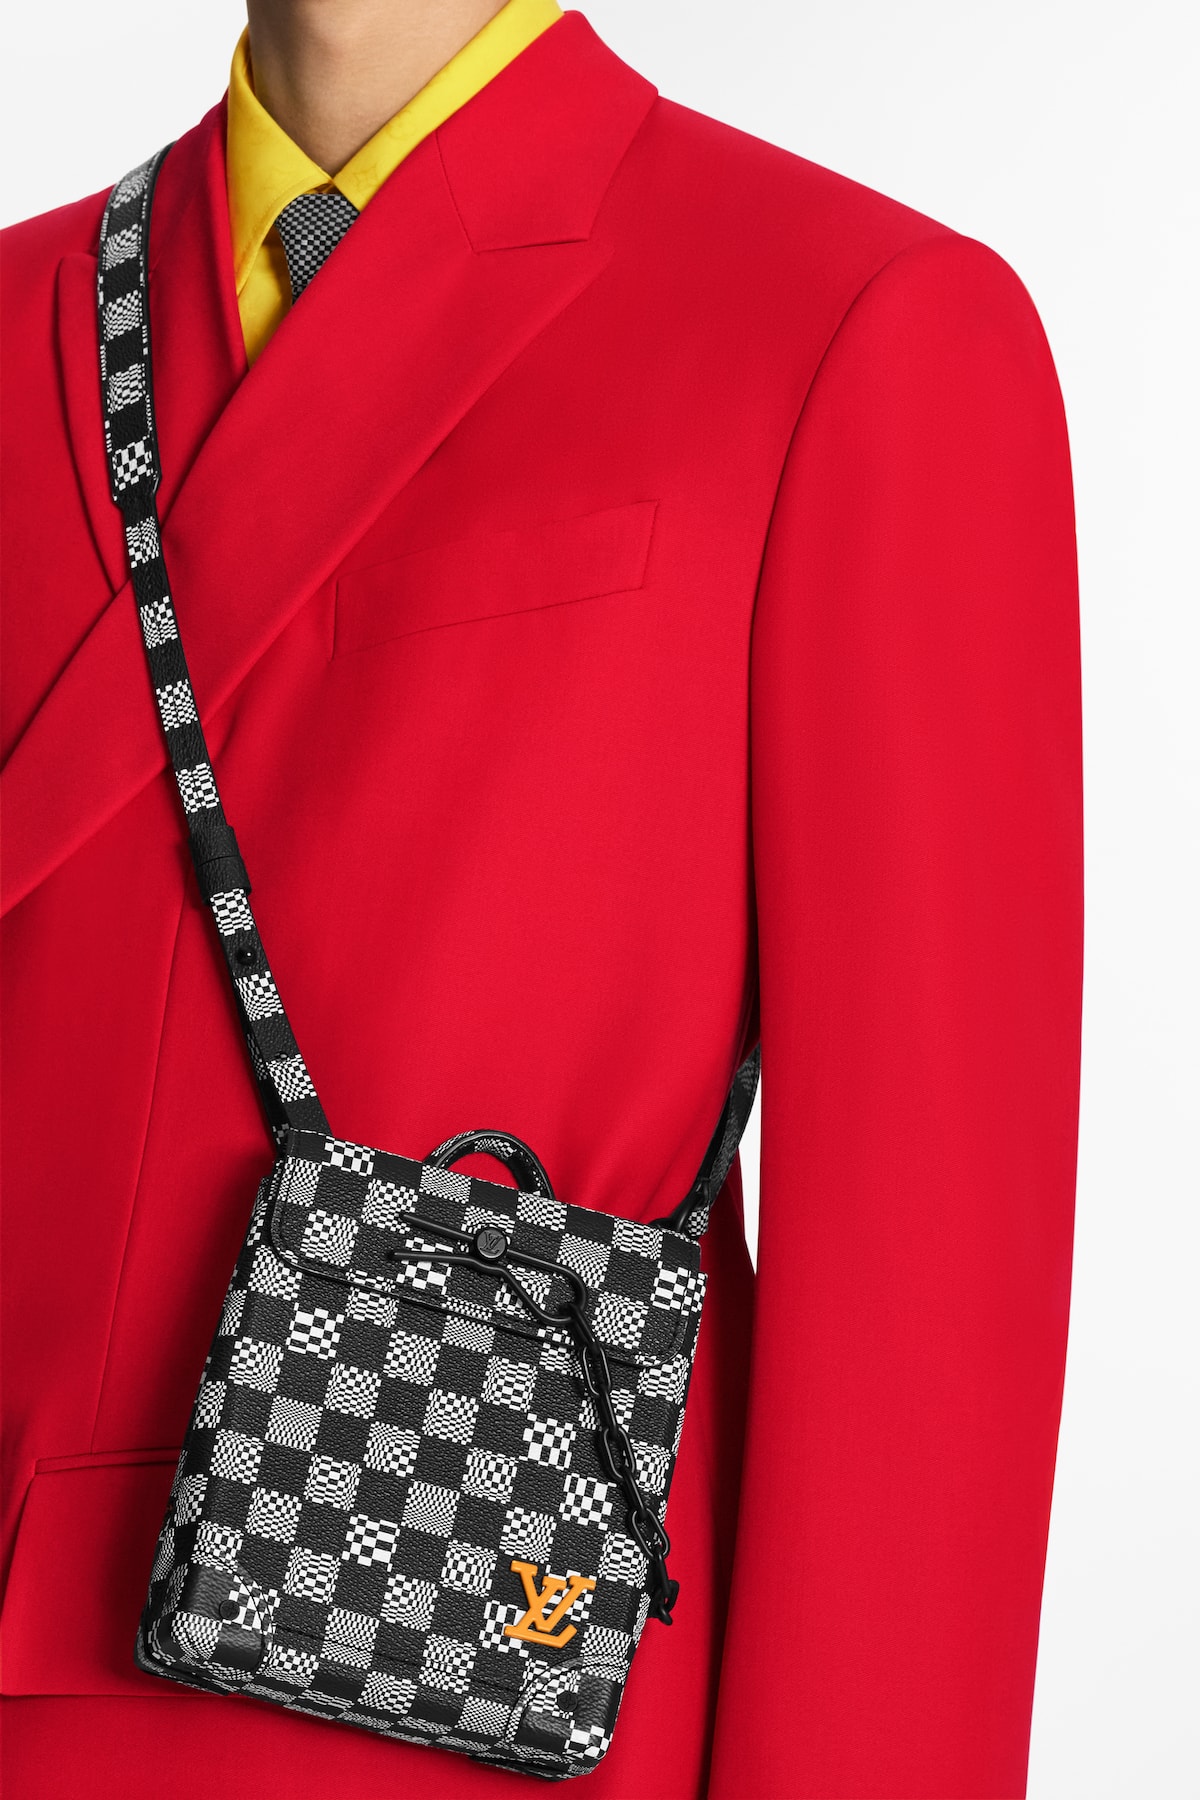 Louis Vuitton 全新 XS 手袋系列登場